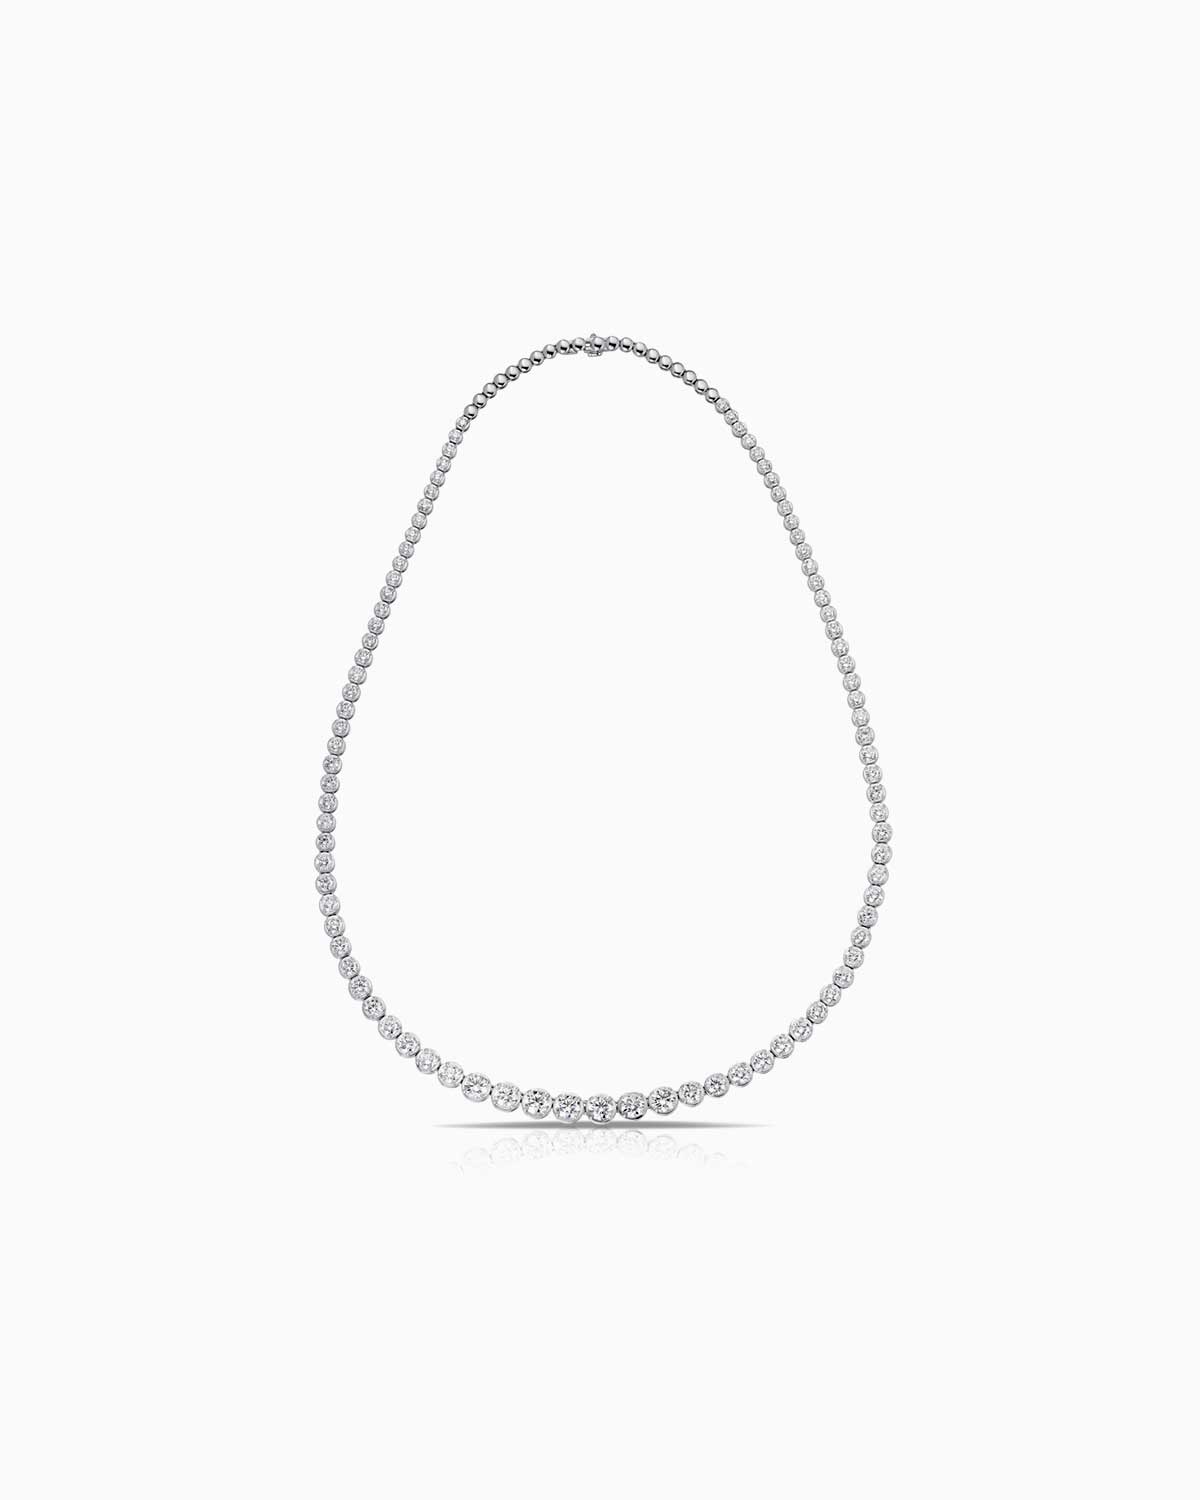 10.00 total diamond weight necklace, featuring graduated bezel set diamonds and 18 karat white gold.